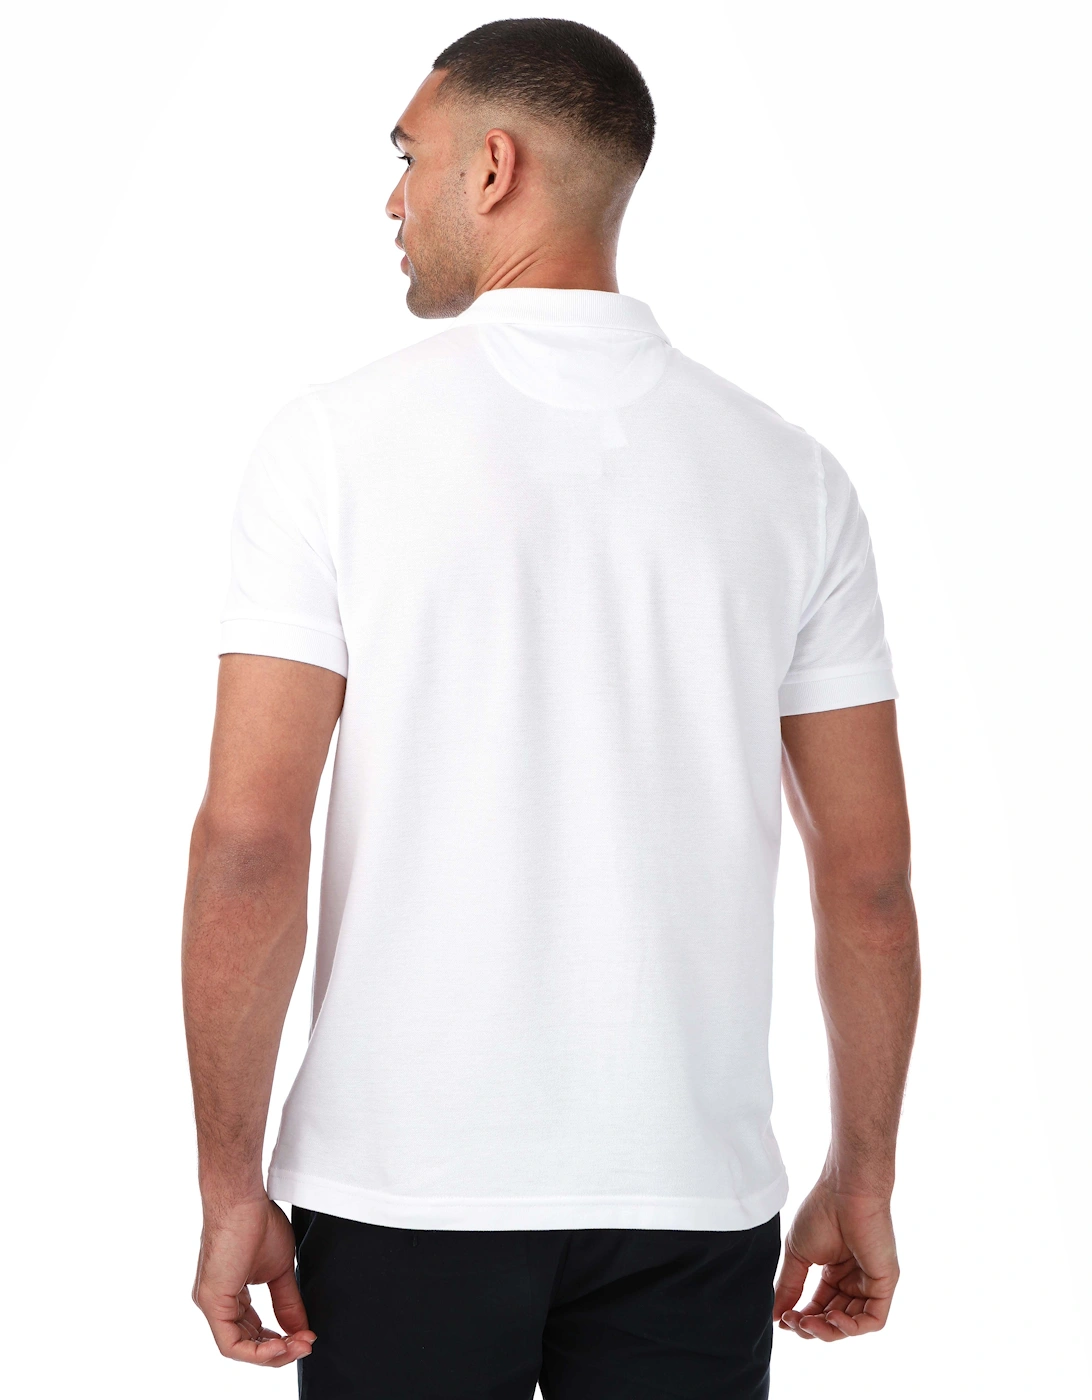 Mens Cove Organic Modern Fit Polo Shirt